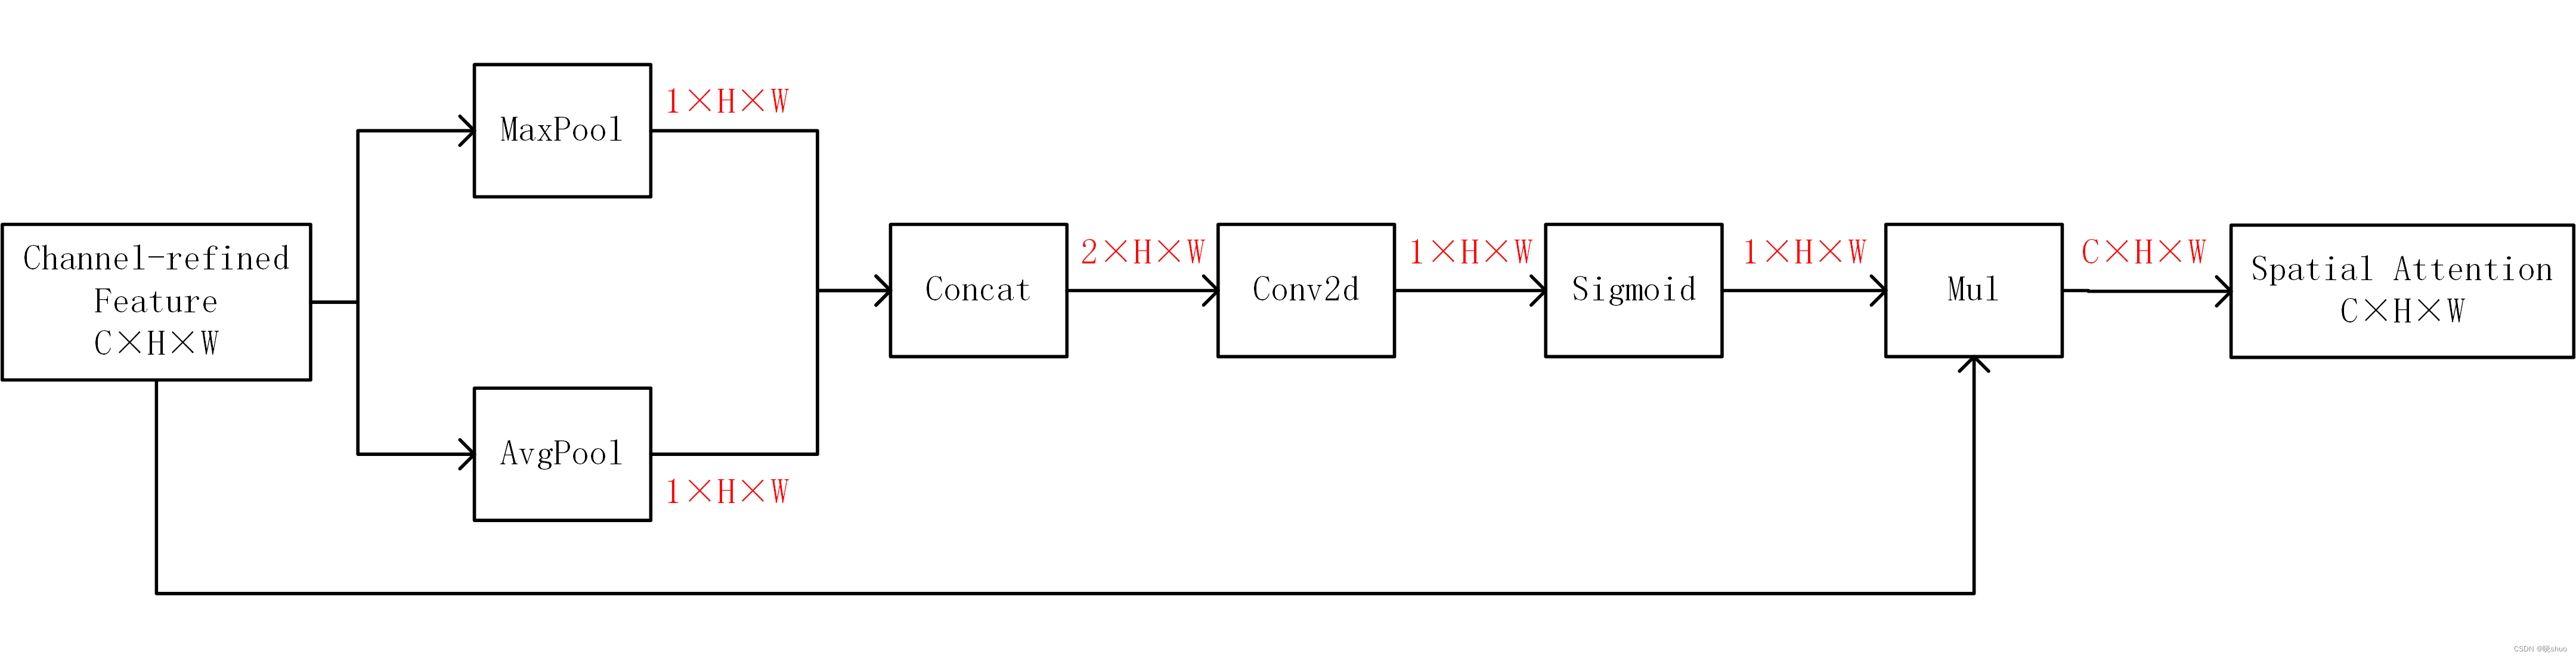 YOLOV5中添加CBAM模块详解——原理+代码